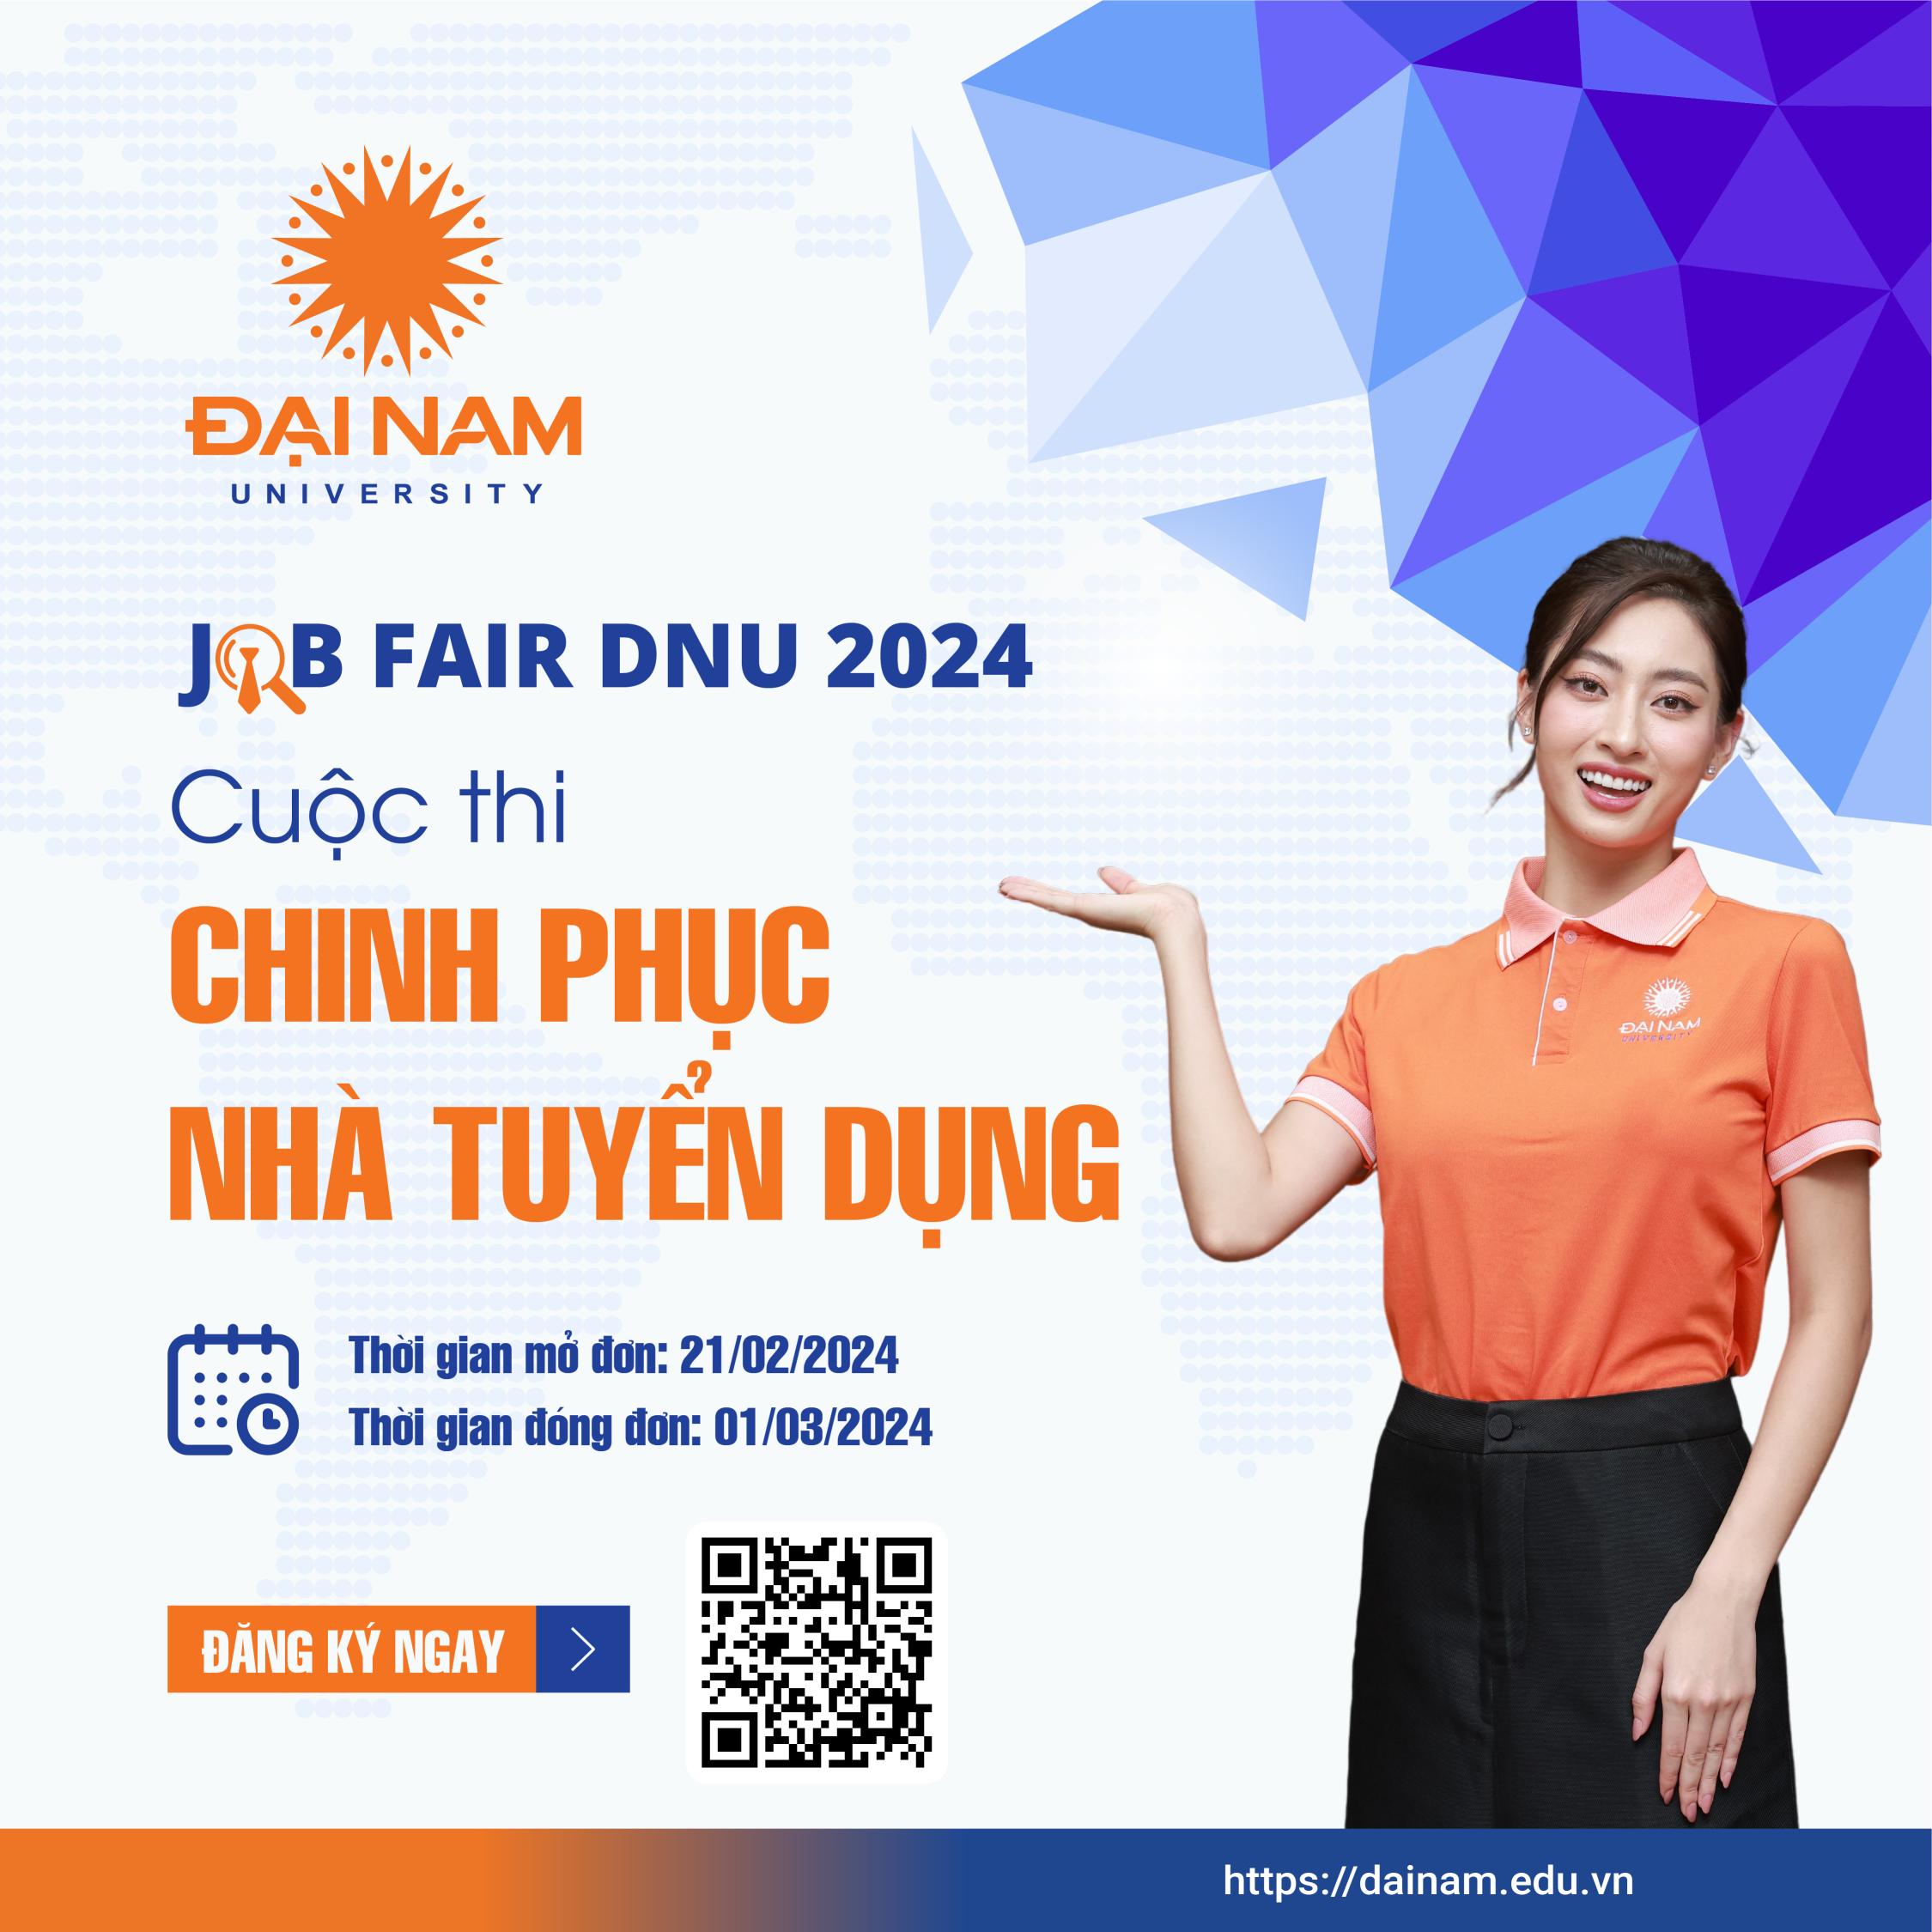 job-fair-dai-hoc-dai-nam-2024-chinh-thuc-khoi-dong-cuoc-thi-chinh-phuc-nha-tuyen-dung-dua-ung-vien-tai-nang-den-doanh-nghiep